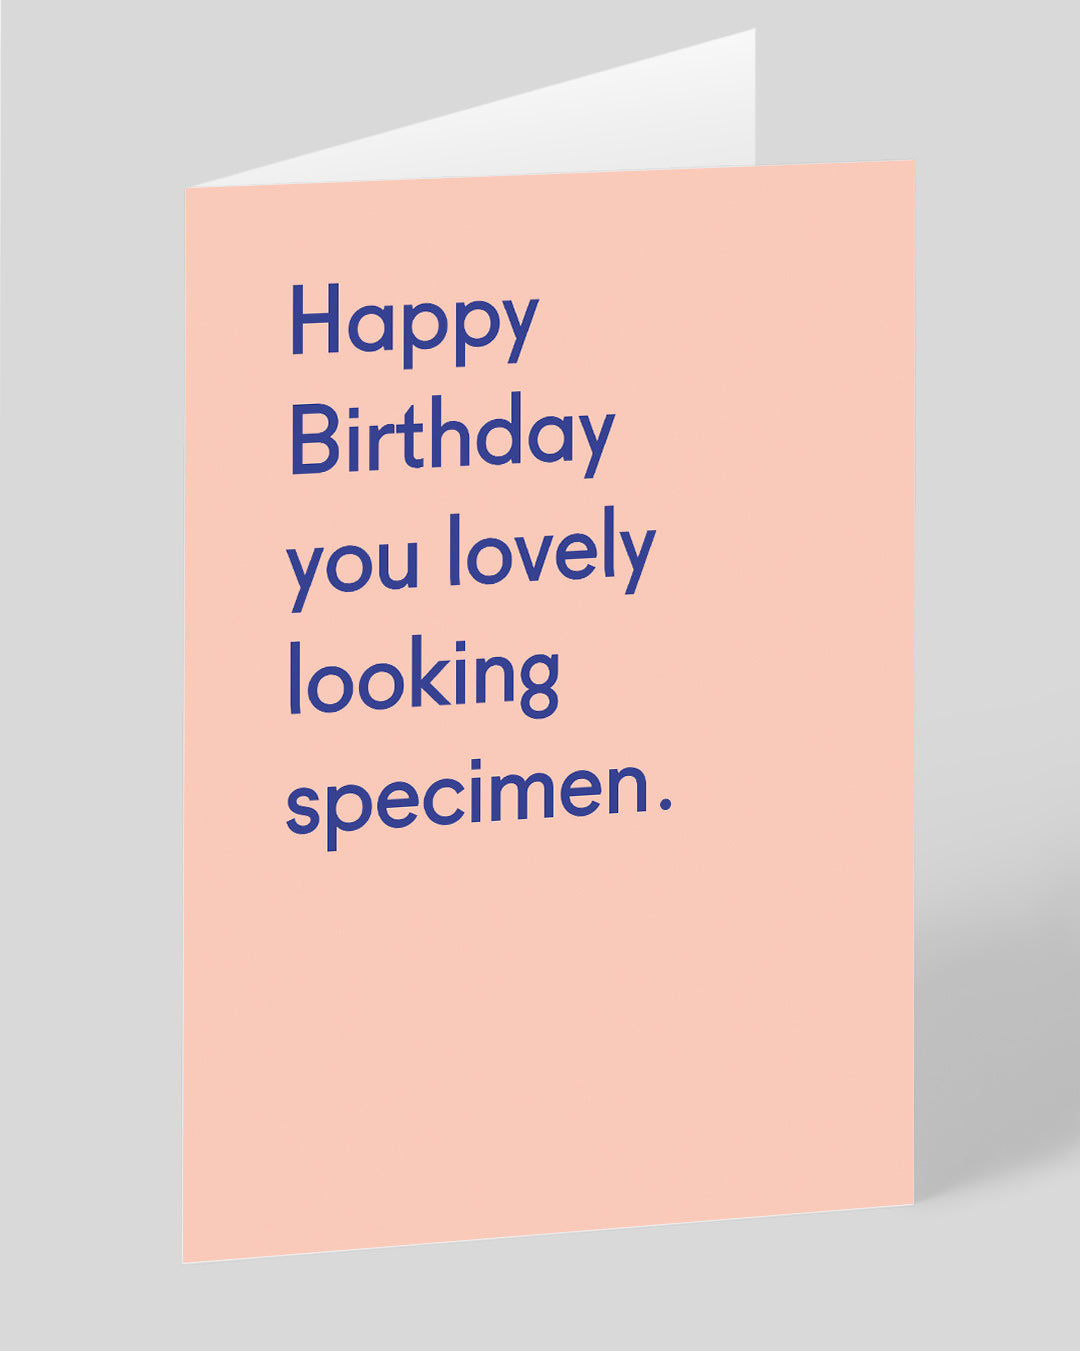 Funny Birthday Card Lovely Looking Specimen Birthday Card